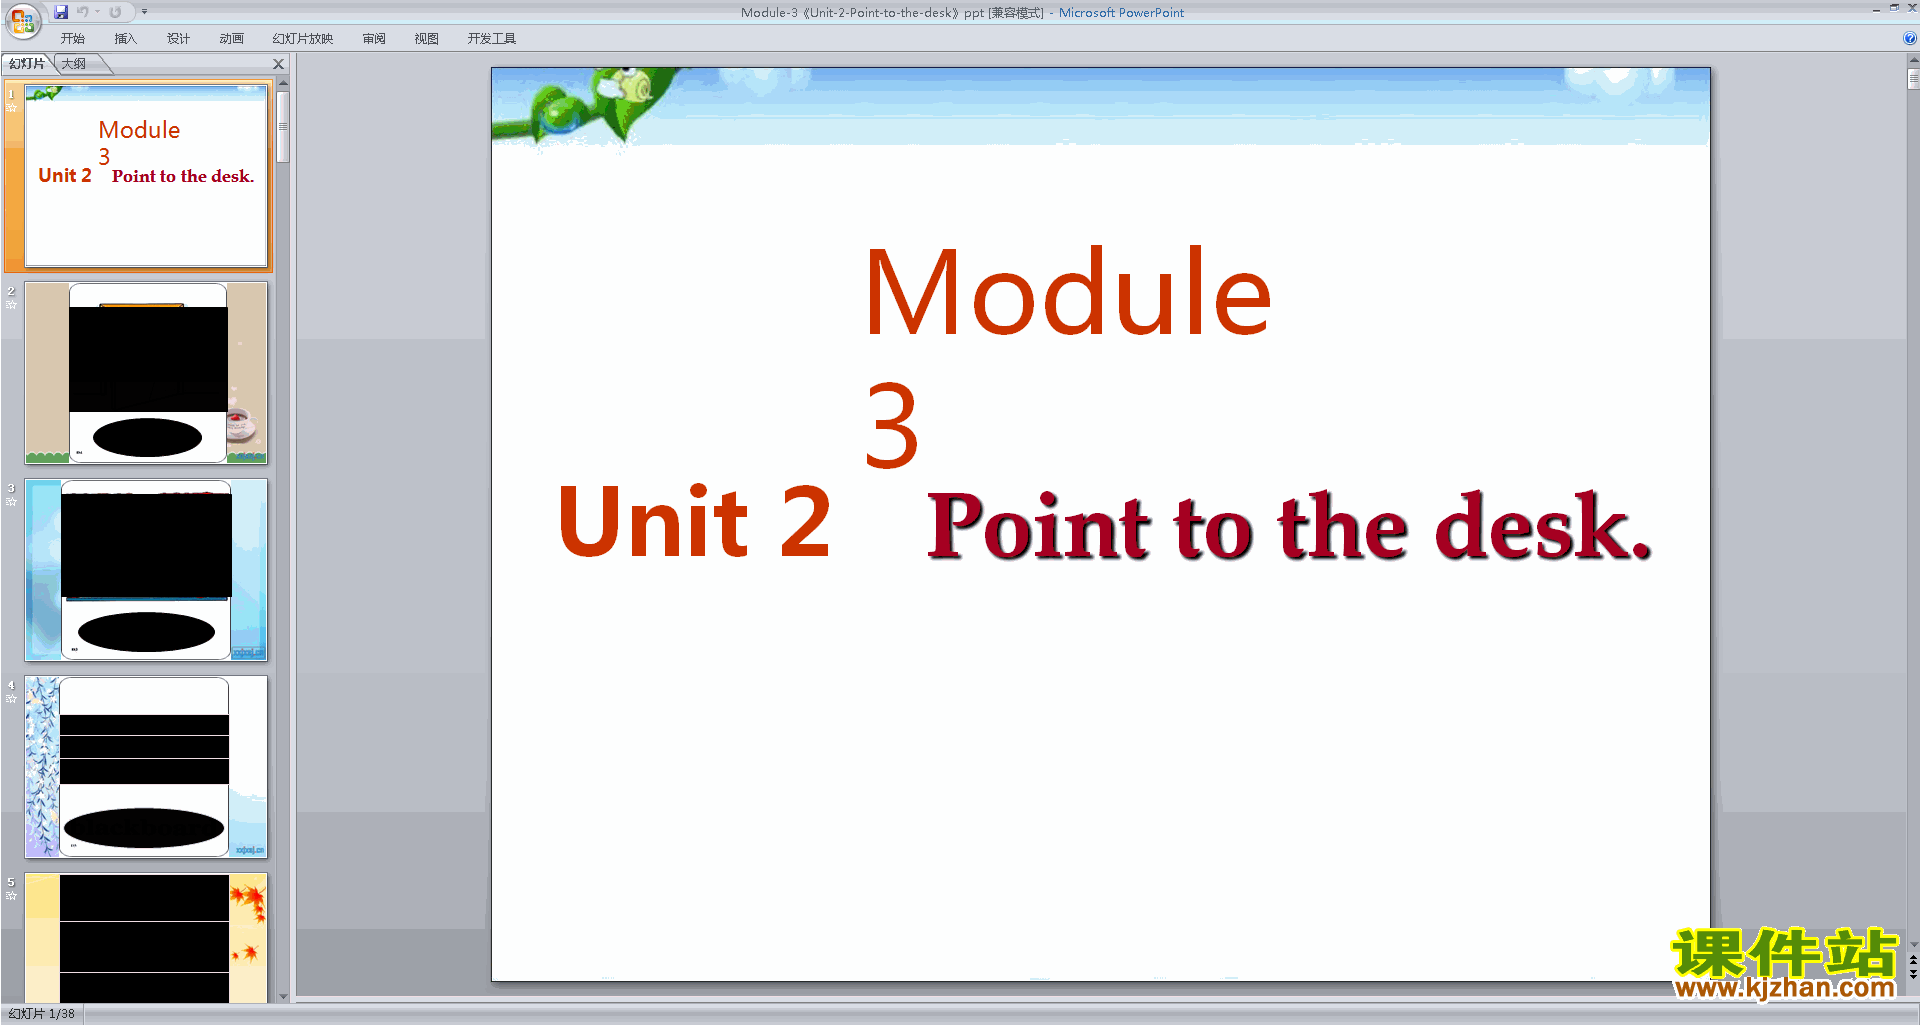 аModule3 Unit2 Point to the deskpptμ